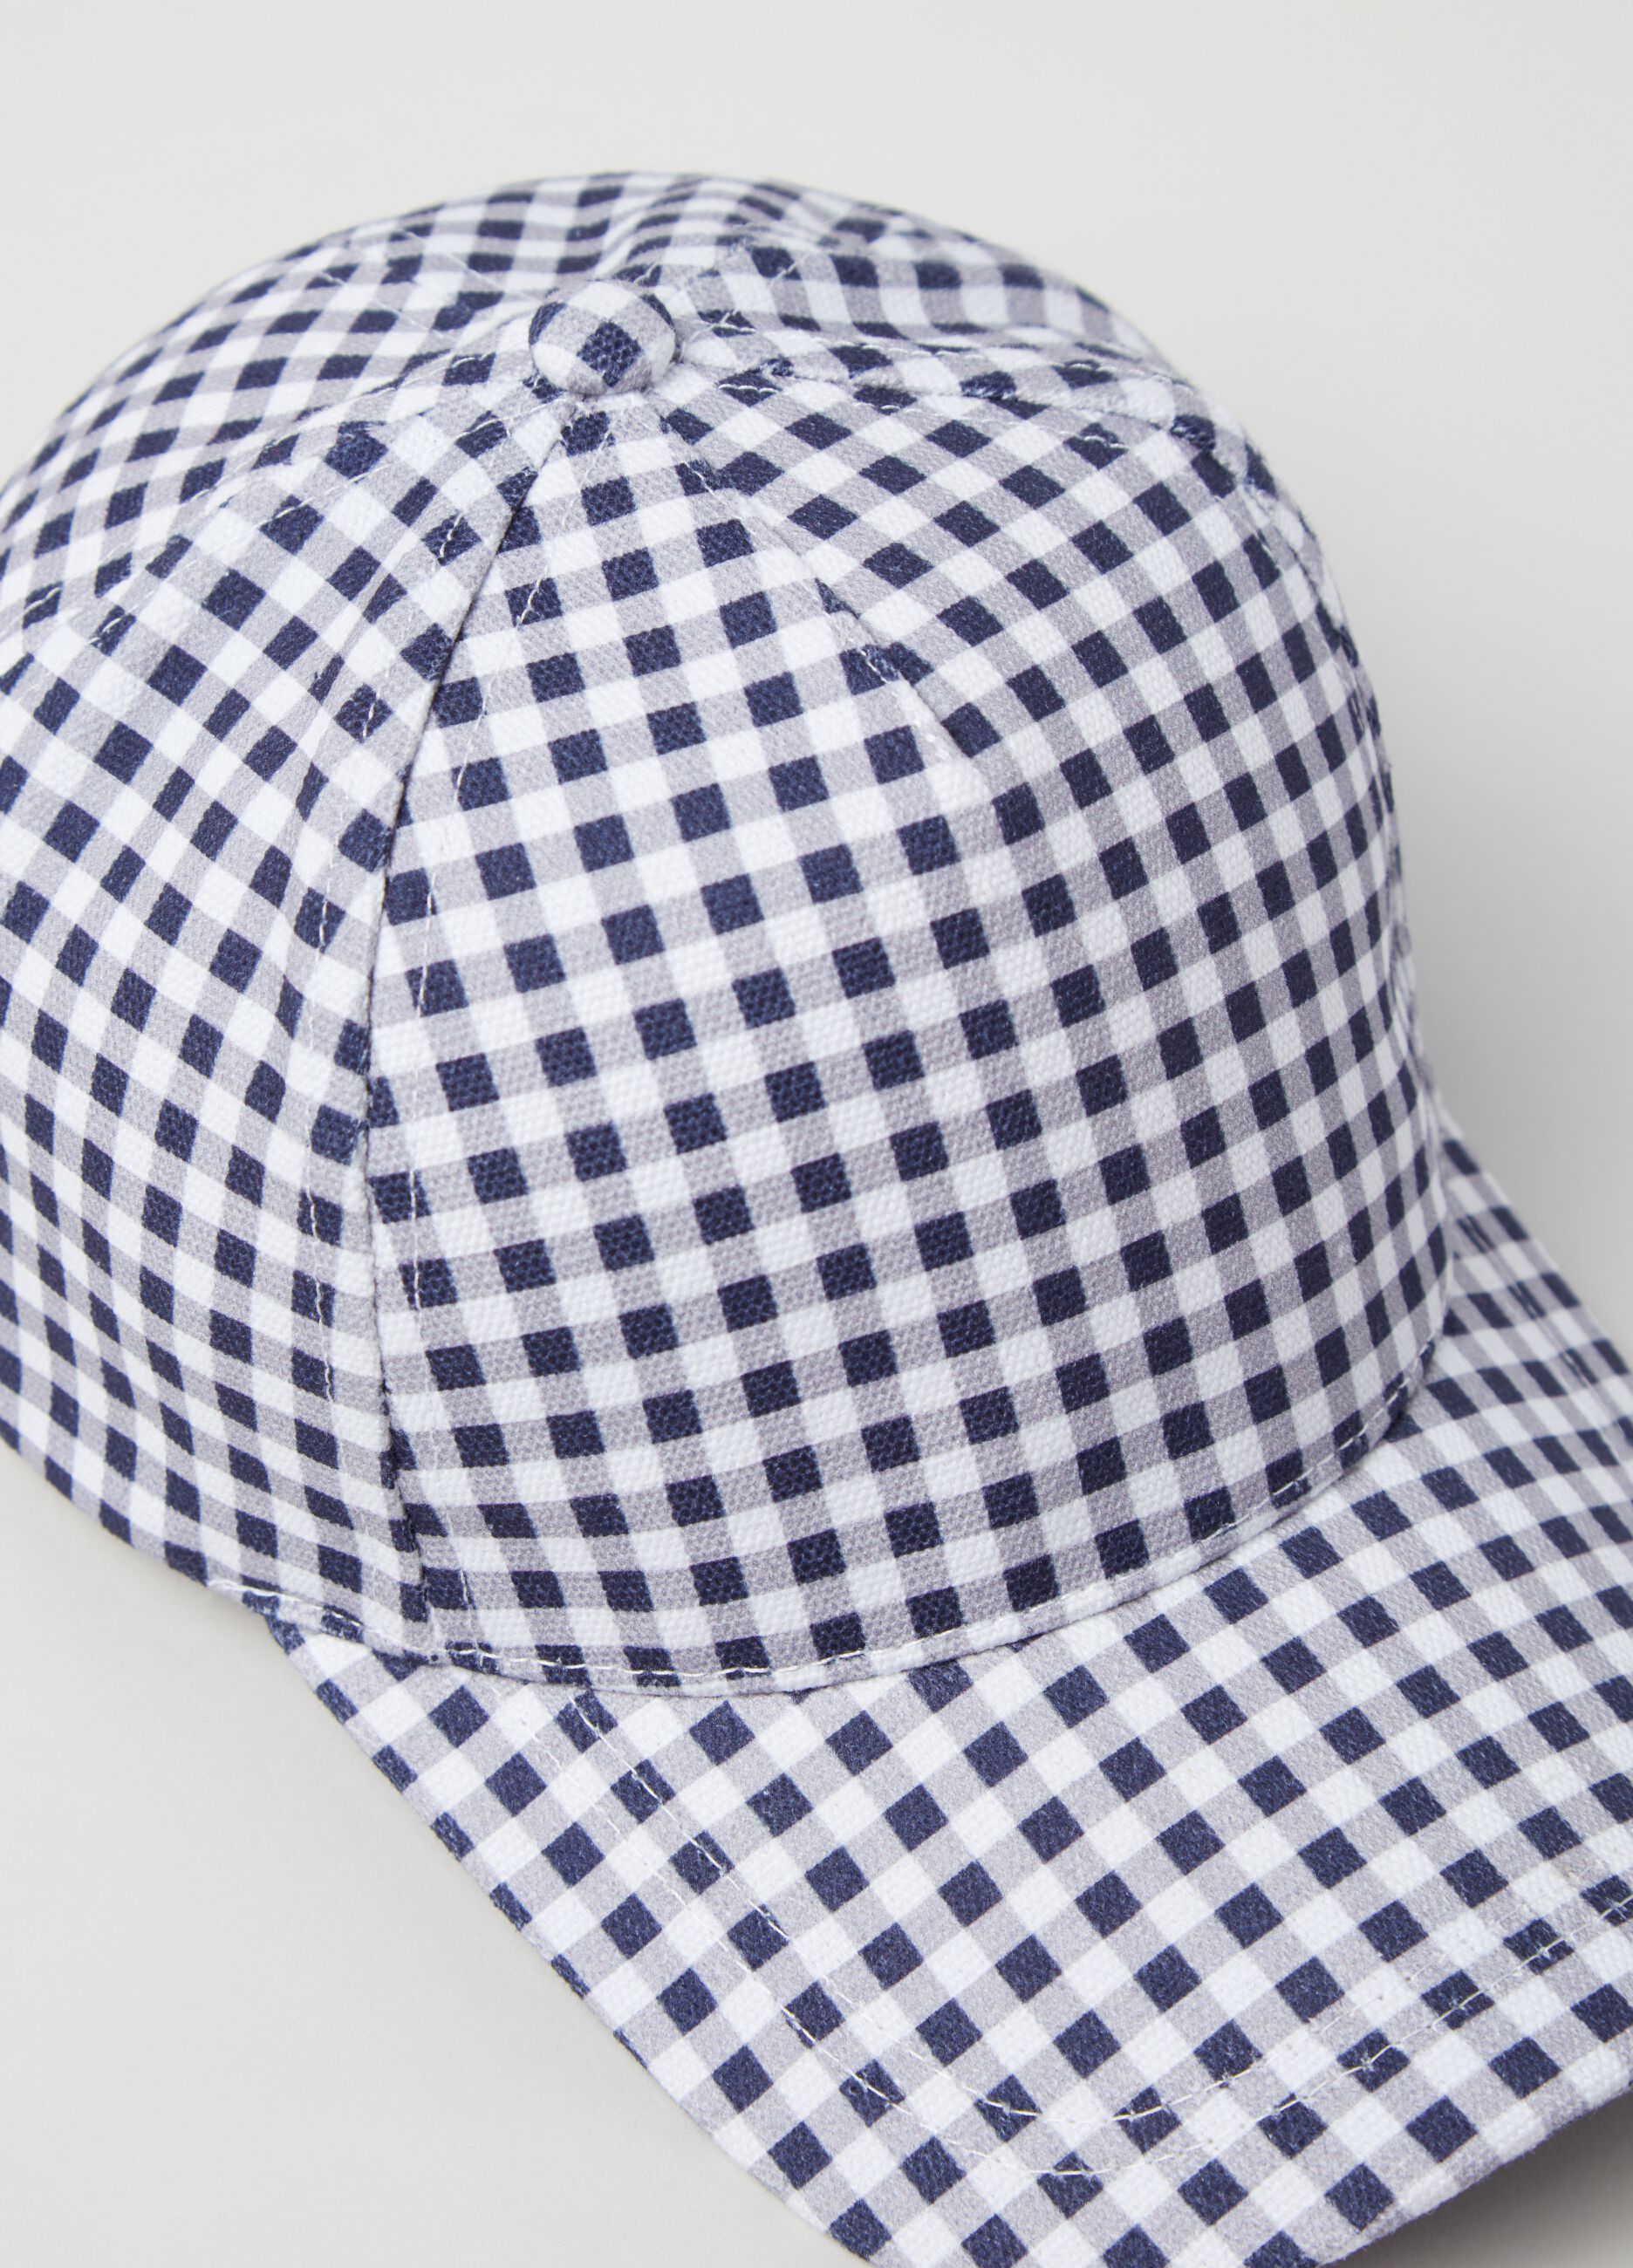 Baseball cap with check print